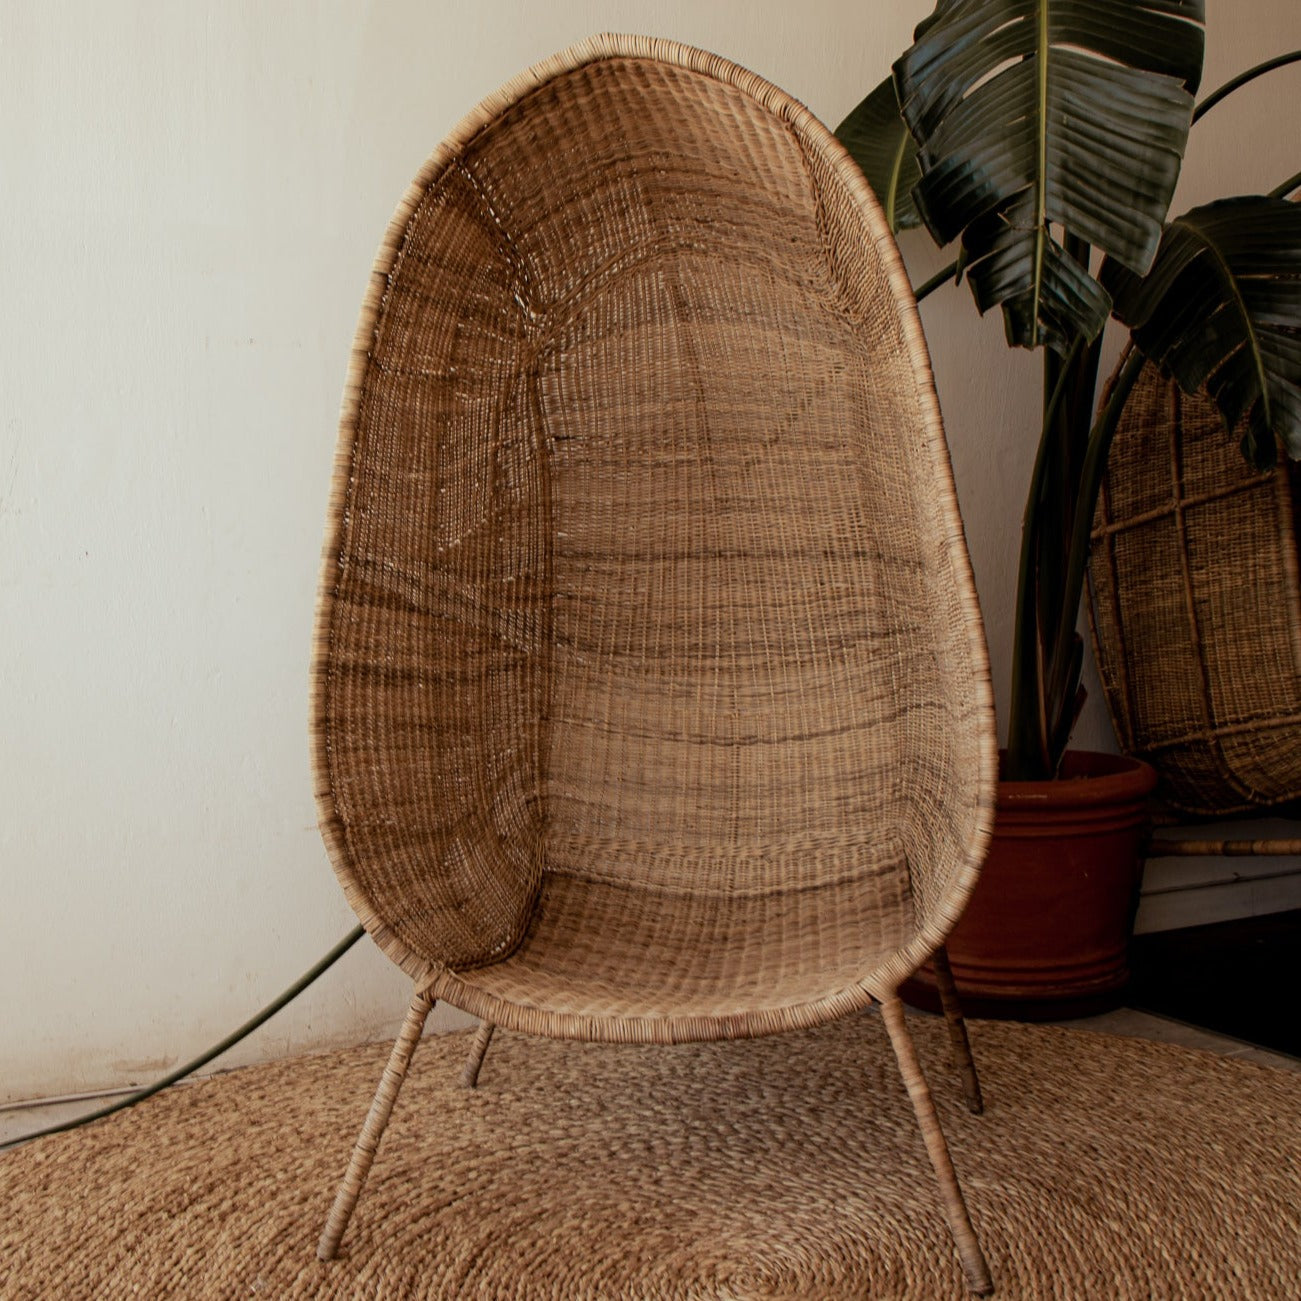 Malawi Egg Chair cane